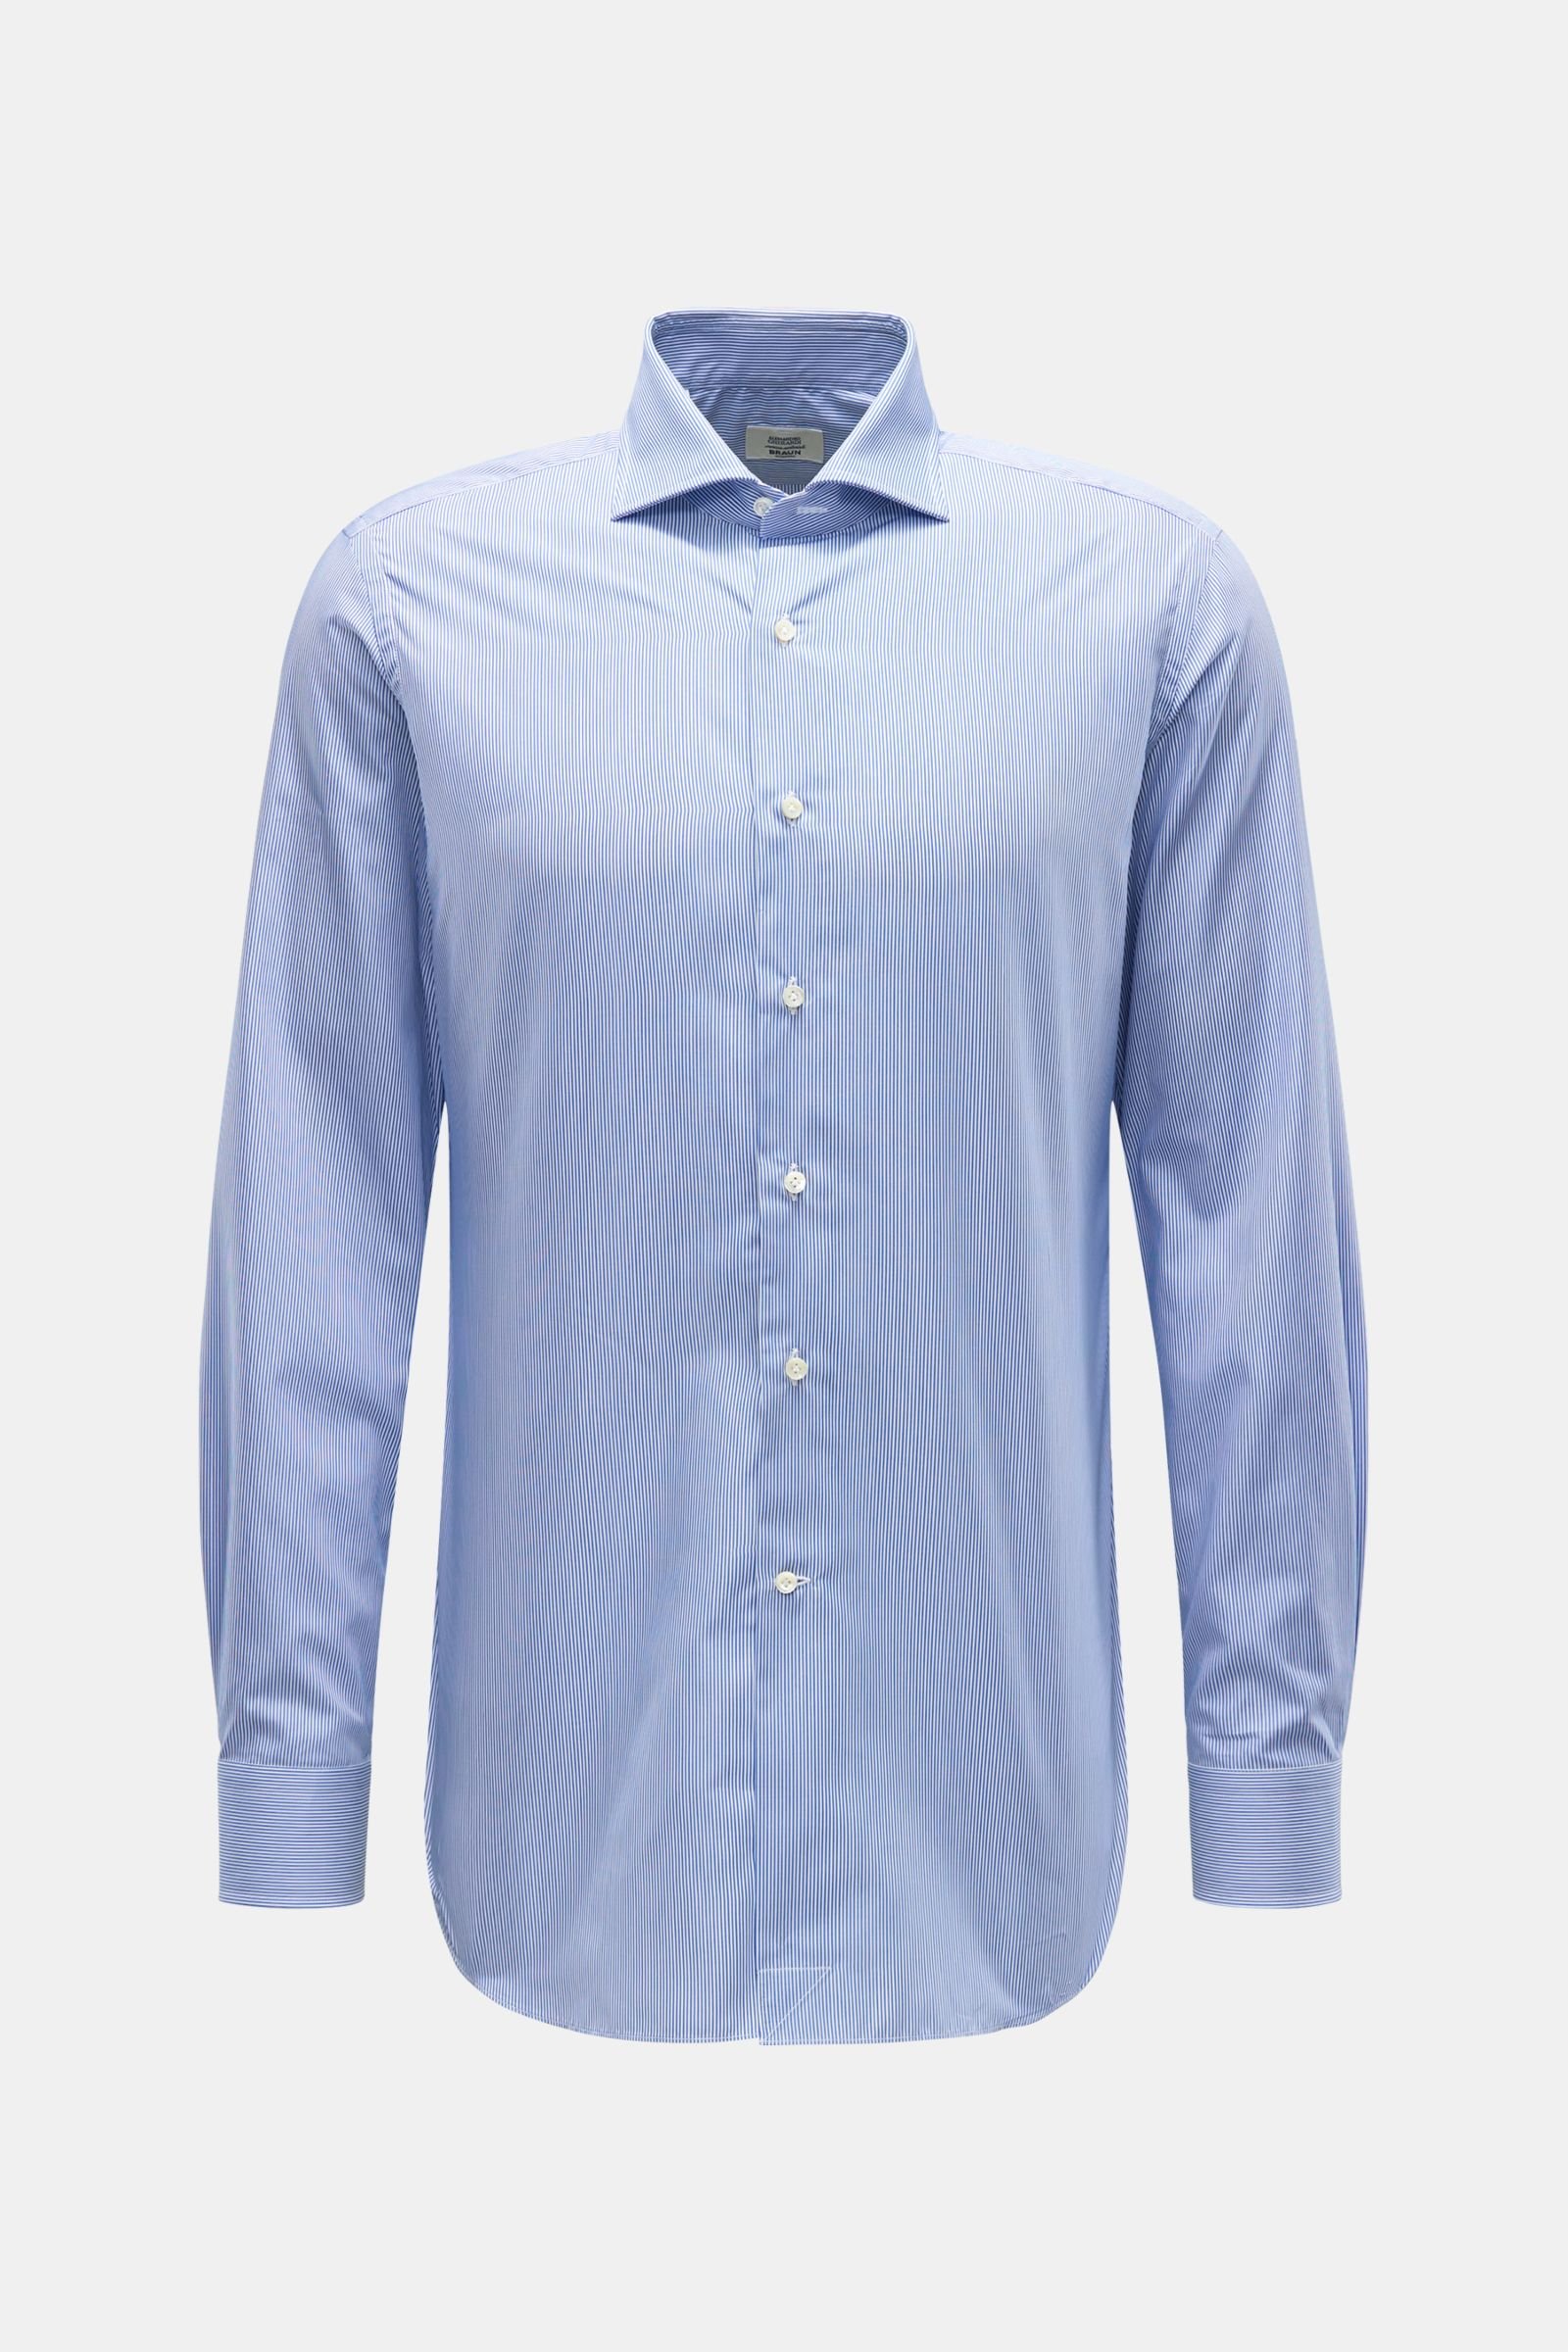 Business shirt shark collar dark blue/white striped